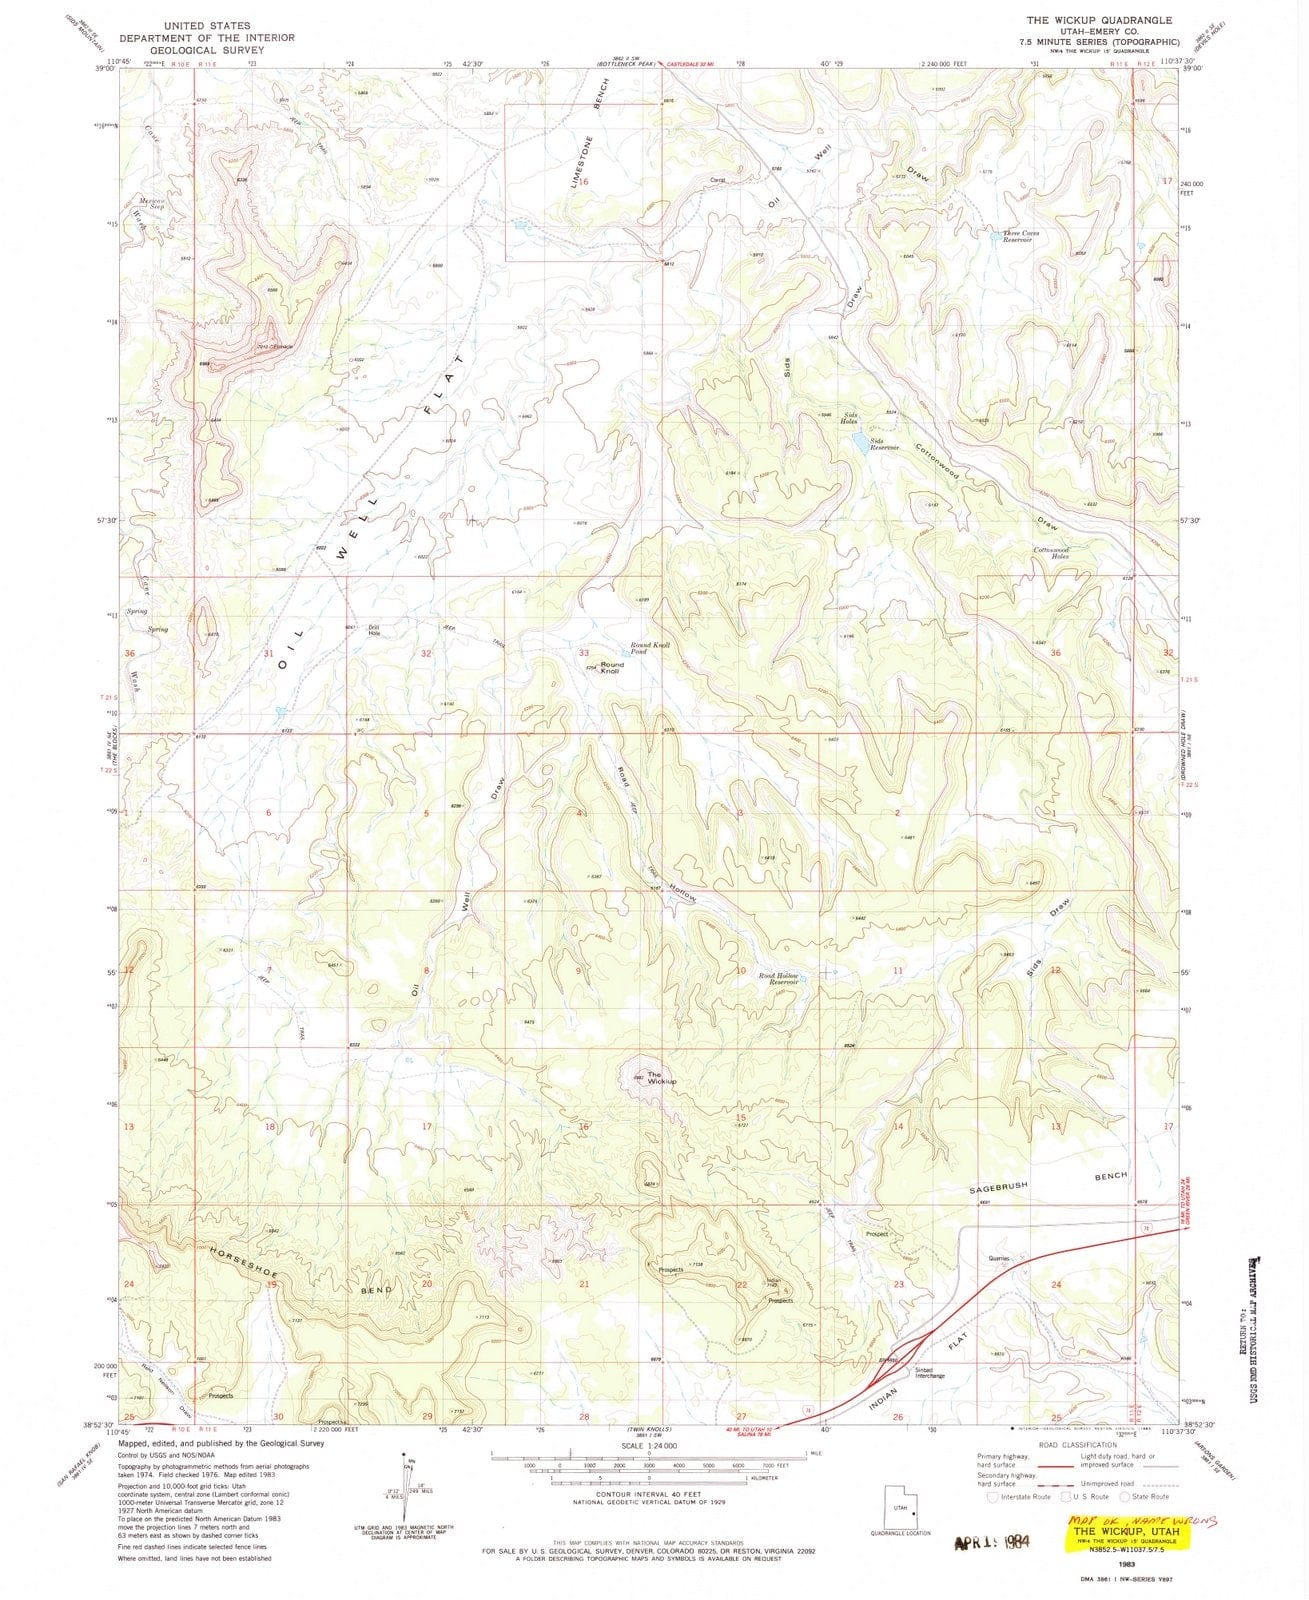 1983 The Wickiup, UT - Utah - USGS Topographic Map